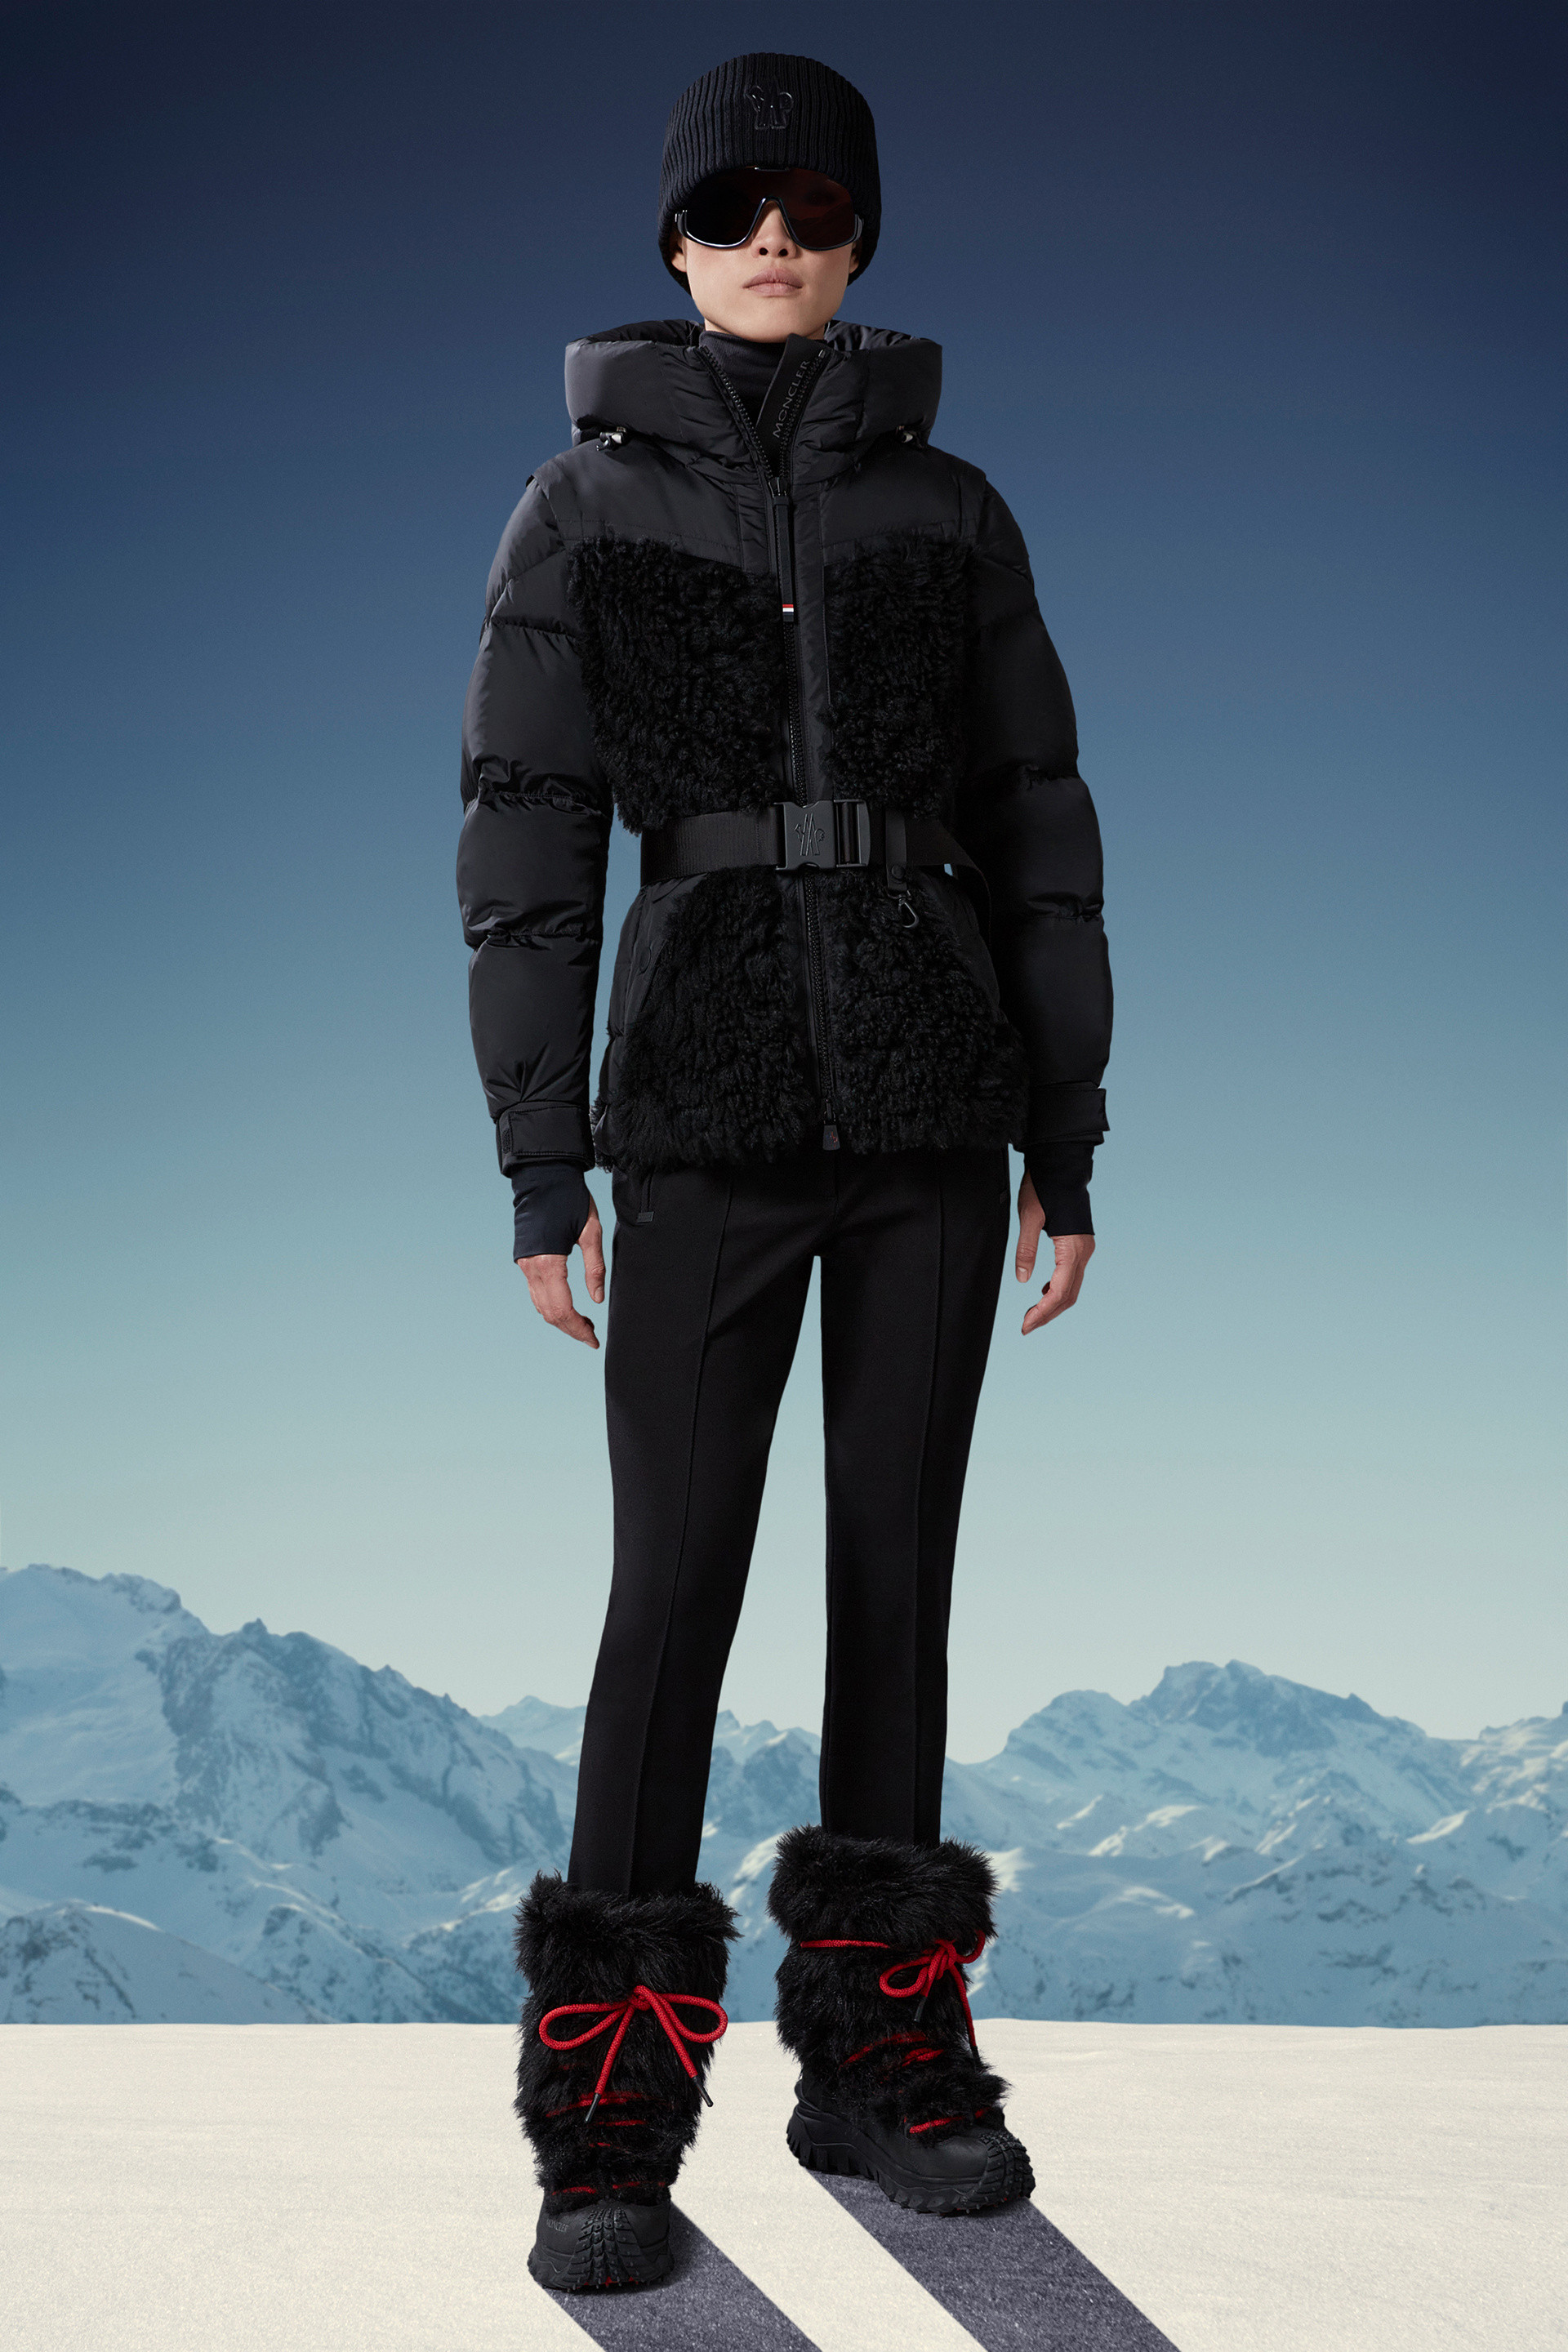 Hainet ski jacket in black - Moncler Grenoble